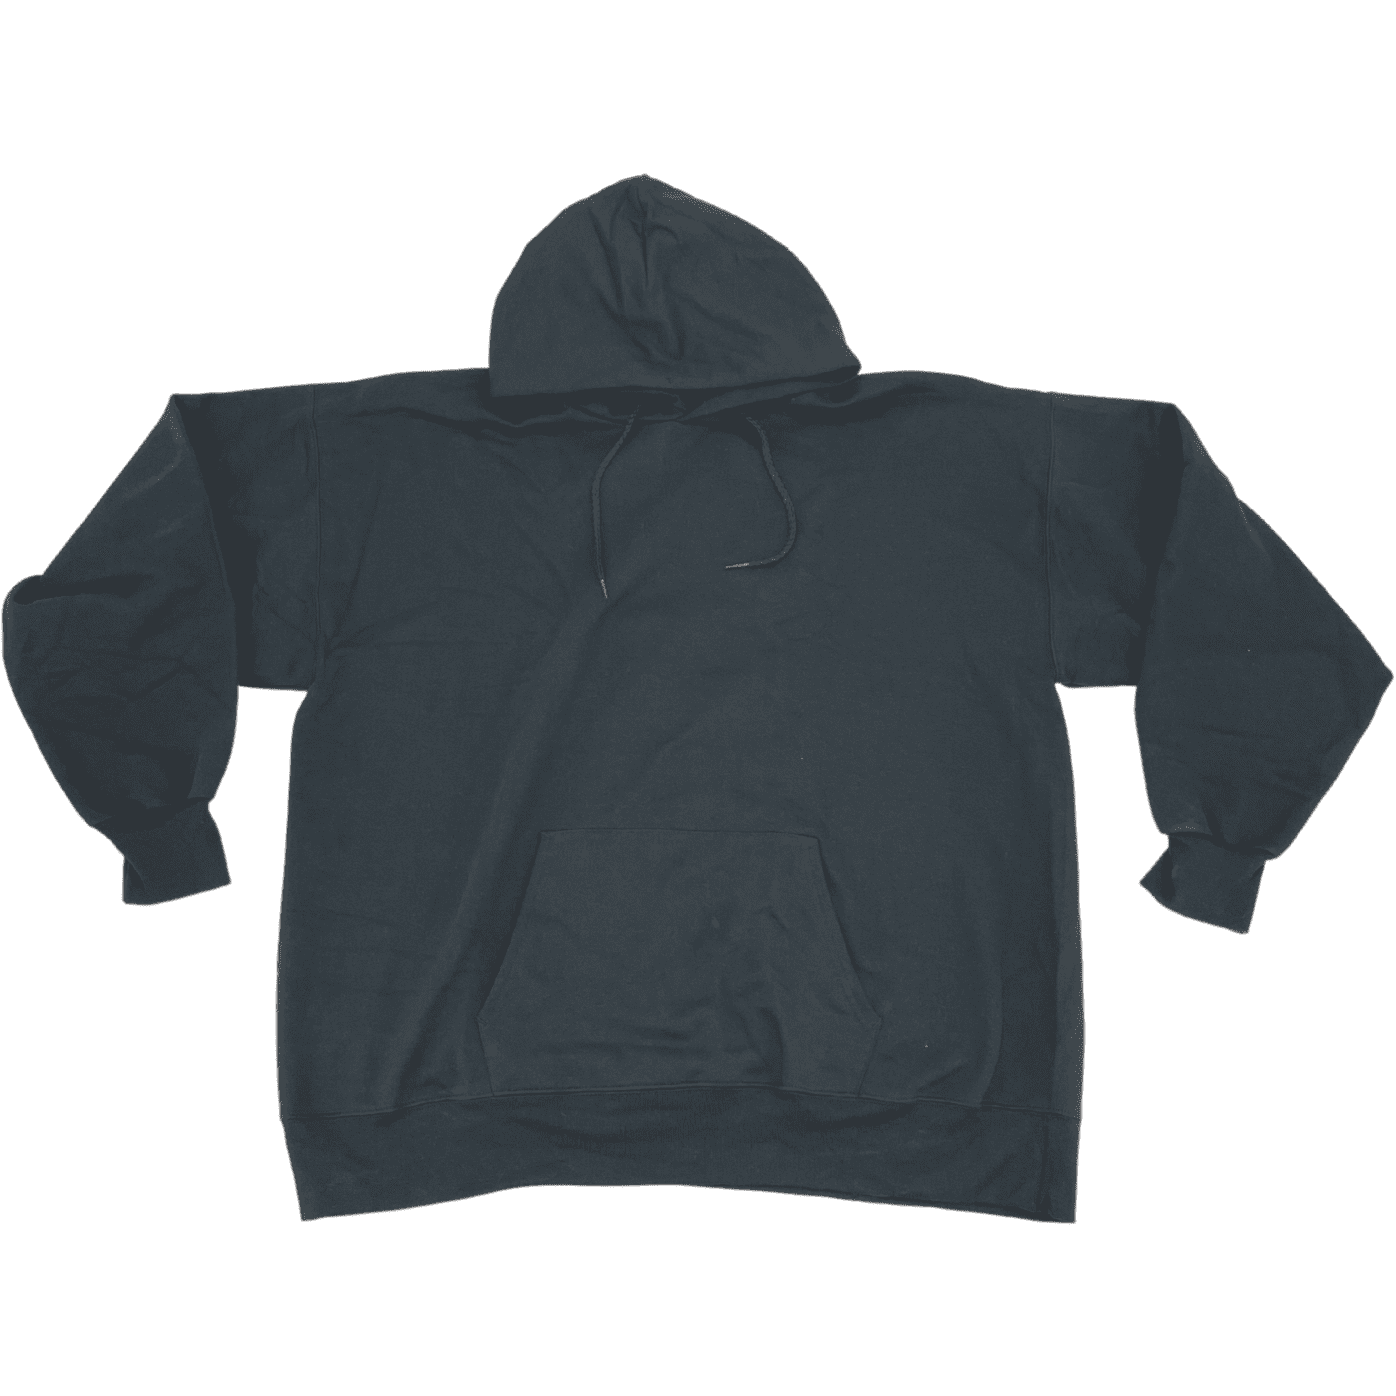 Hanes Men's Hoodie / Men's Sweatshirt / Black / Size XLarge **No Tags**